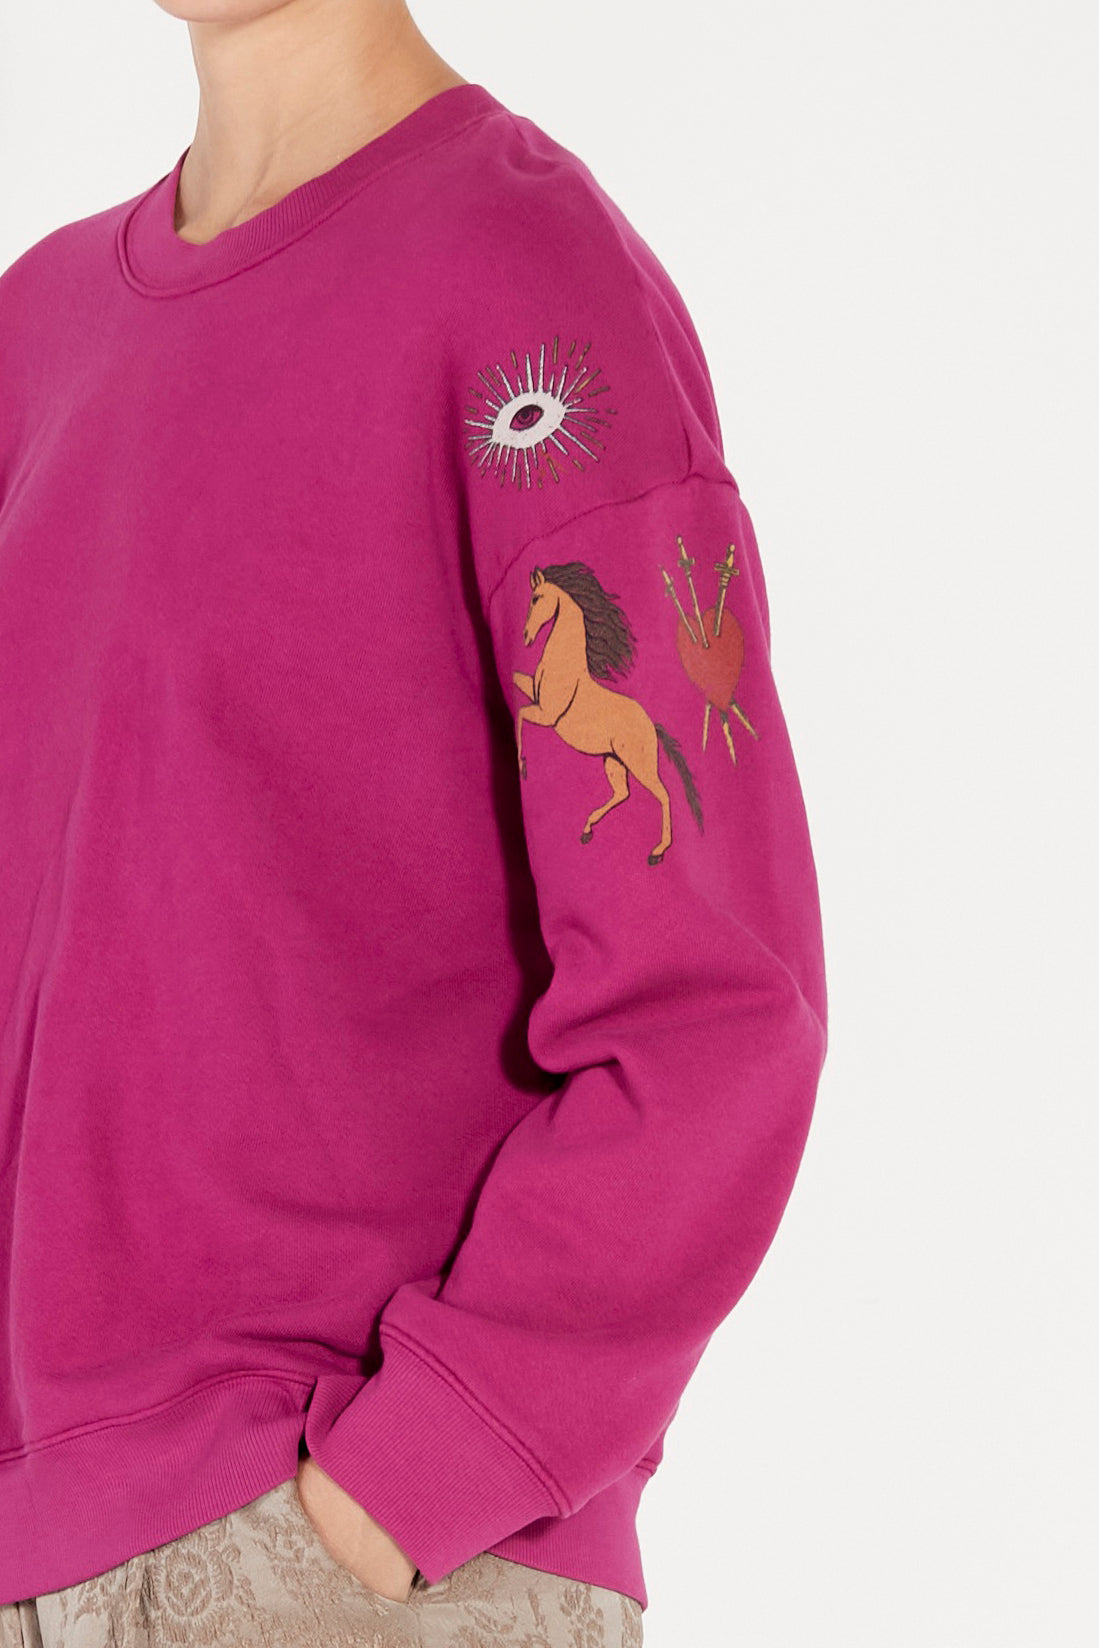 Dahlia Tarot Fleece Yves Sweatshirt Side Close-Up View